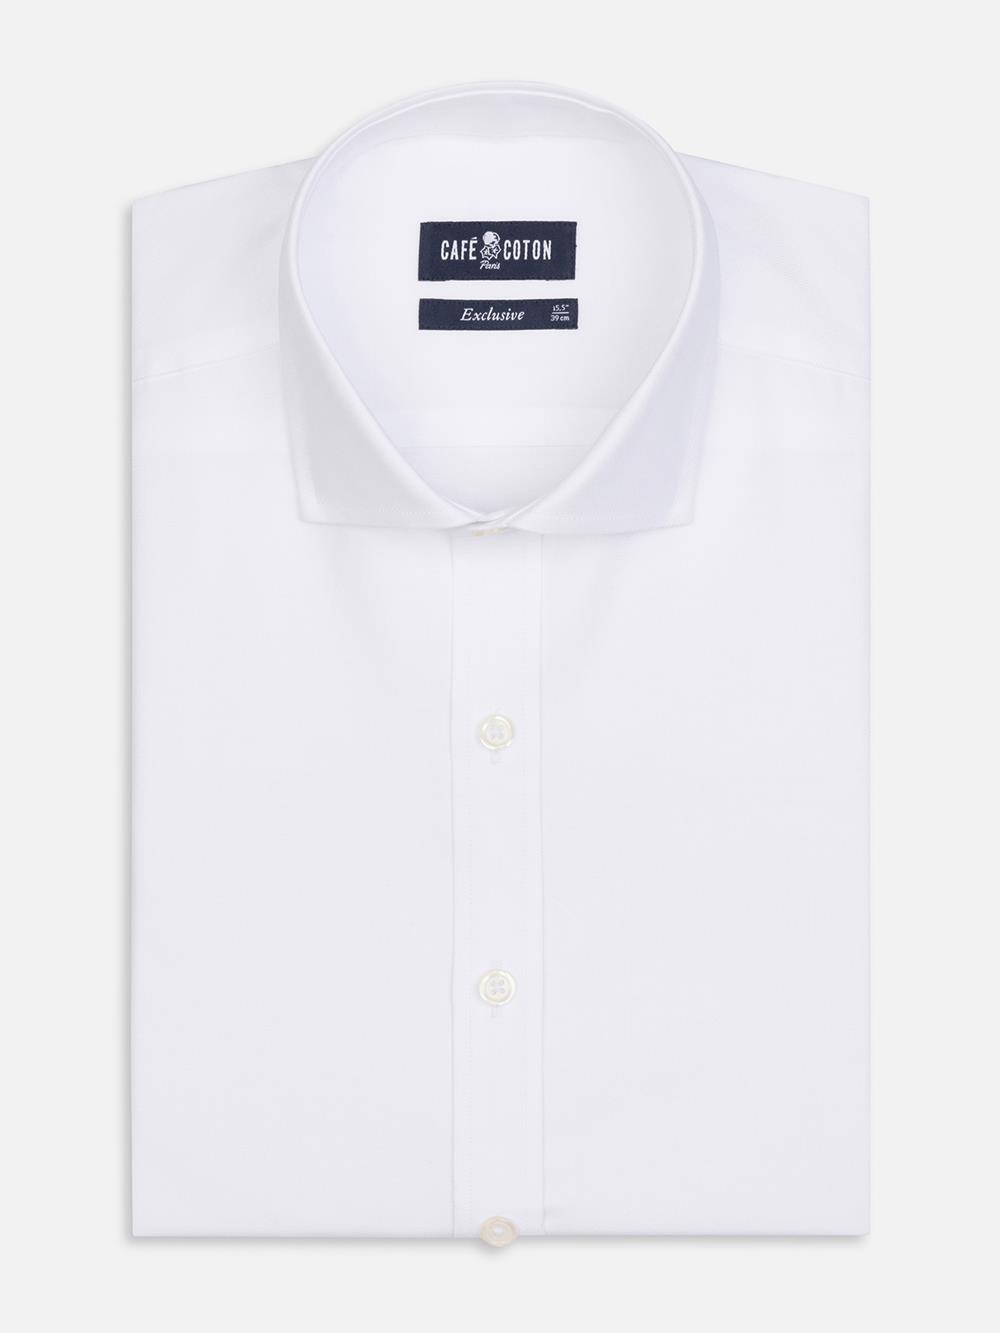 Oxfordhemd weiß